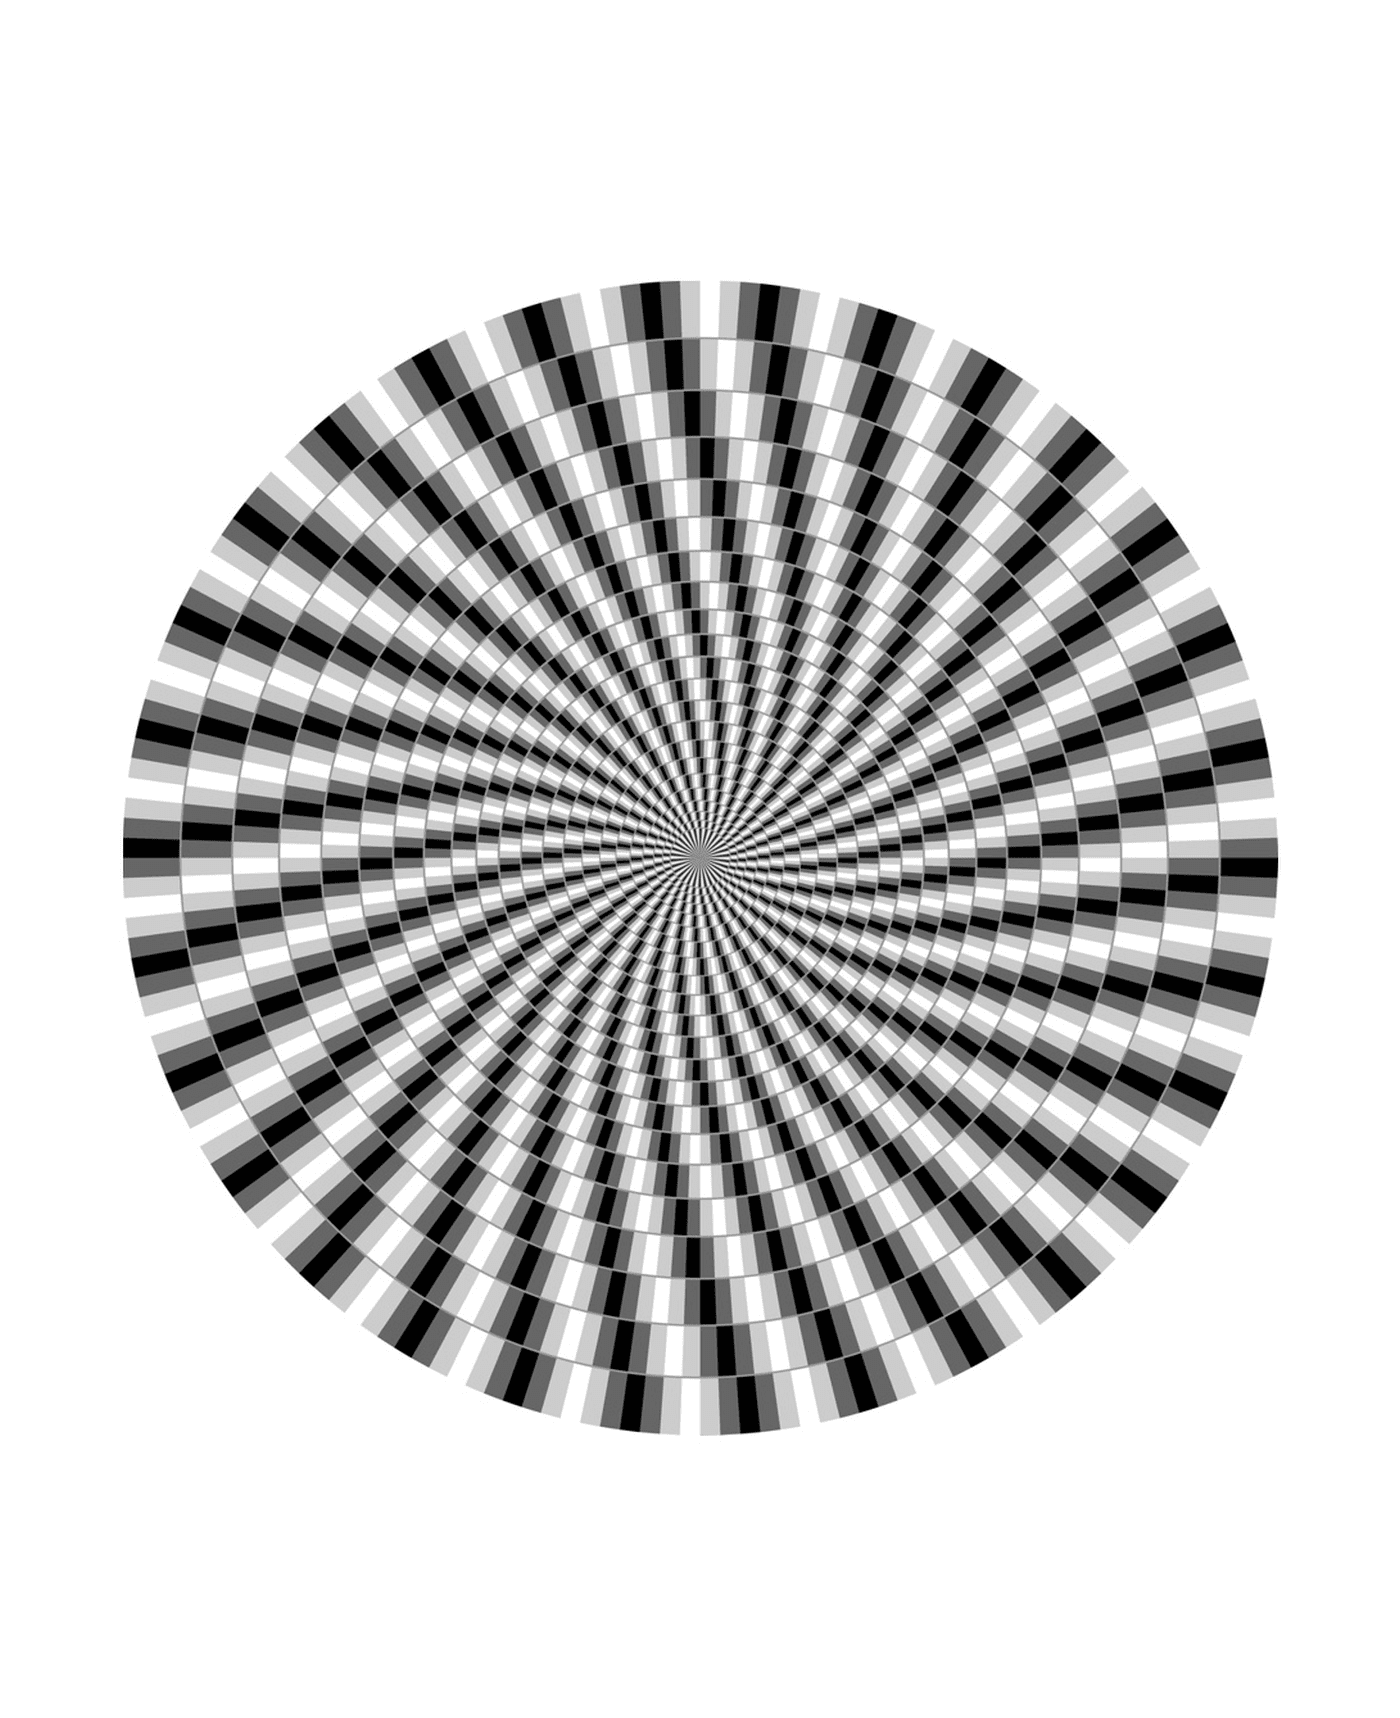  an optical illusion 